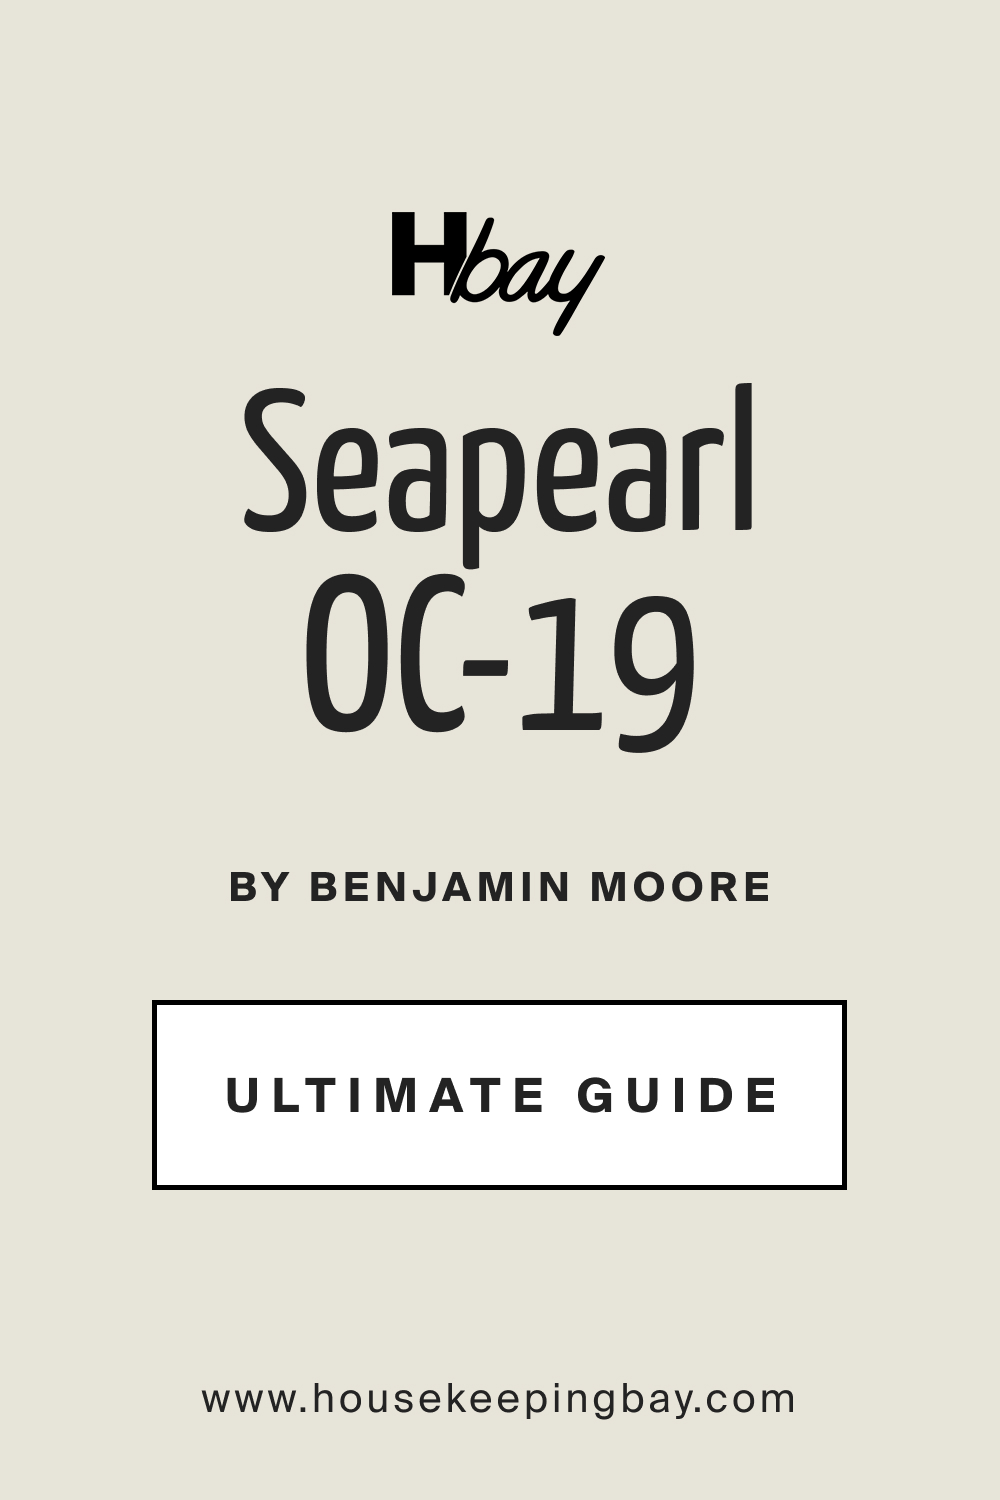 Seapearl OC 19 by Benjamin Moore Ultimate Guide